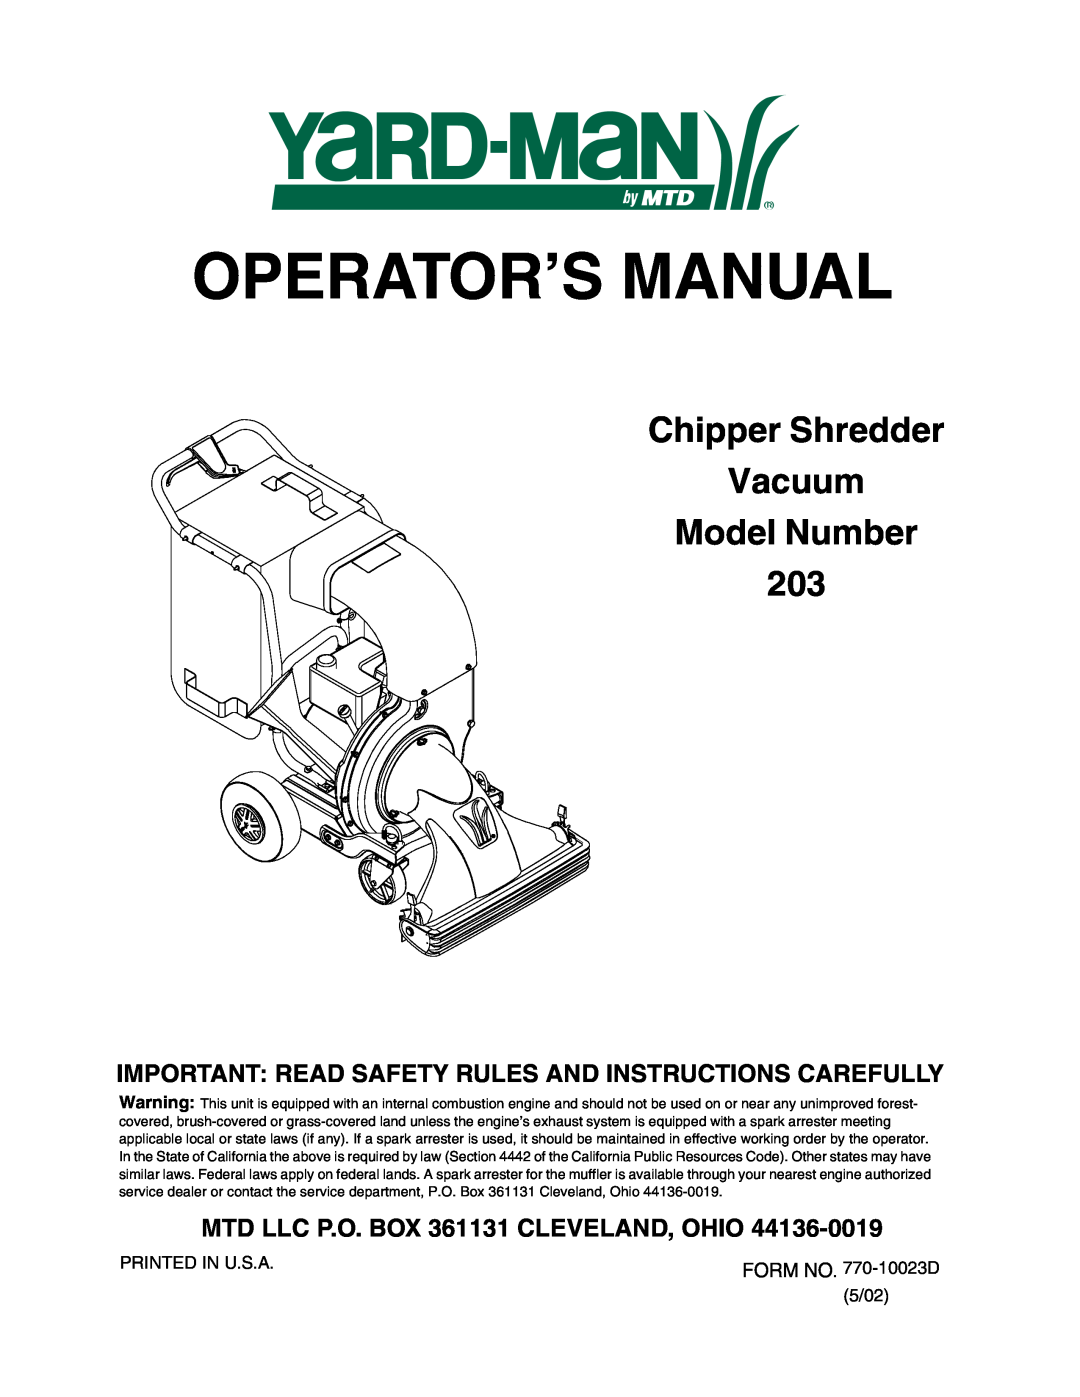 MTD manual Operator’S Manual, Chipper Shredder Vacuum Model Number 203, MTD LLC P.O. BOX 361131 CLEVELAND, OHIO 